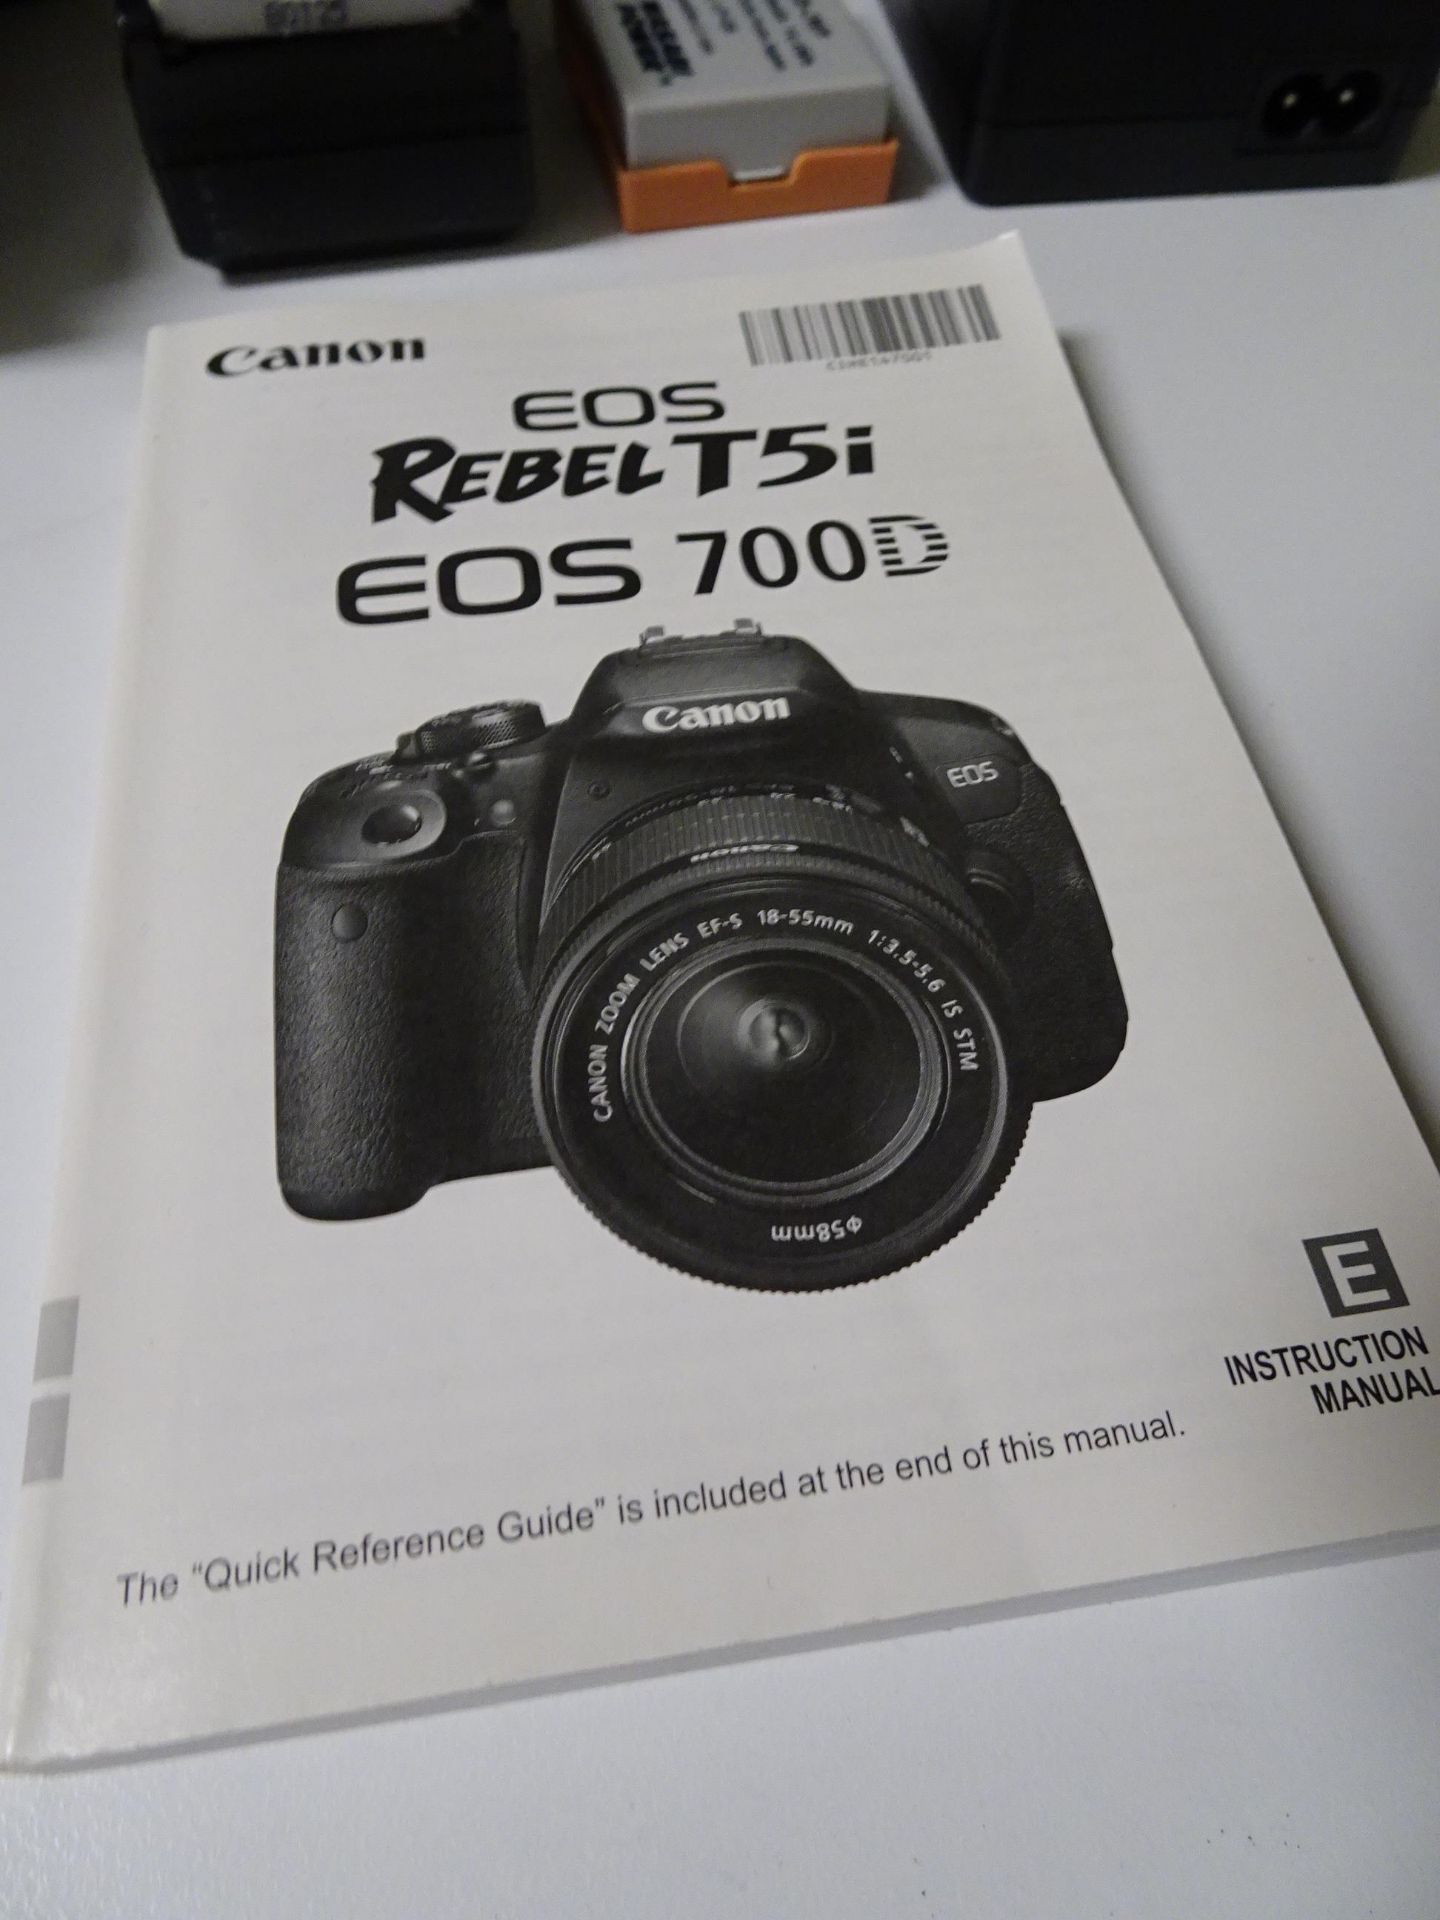 Canon EOS Rebel T5i DSLR sn 302075003371 w/ Canon EF-S 18-55mm 1:3.5-5.6 IS STM /58mm Lens, (2) - Image 9 of 15